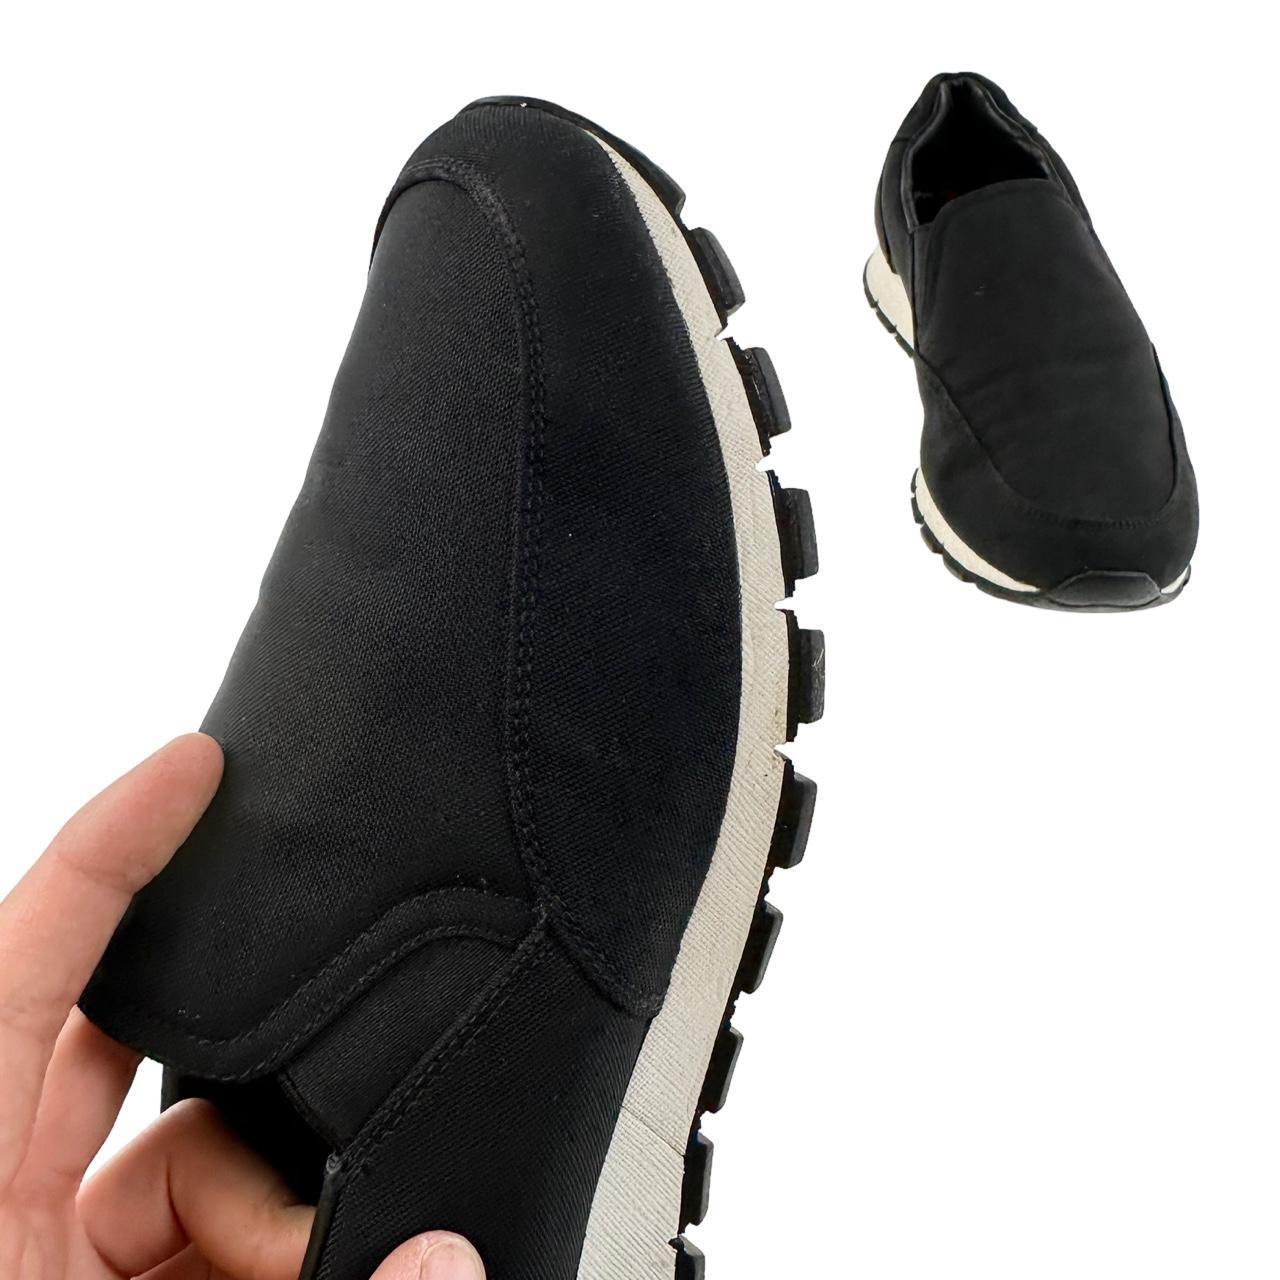 Prada Sport Slip On Shoes Size UK 10.5 - Known Source